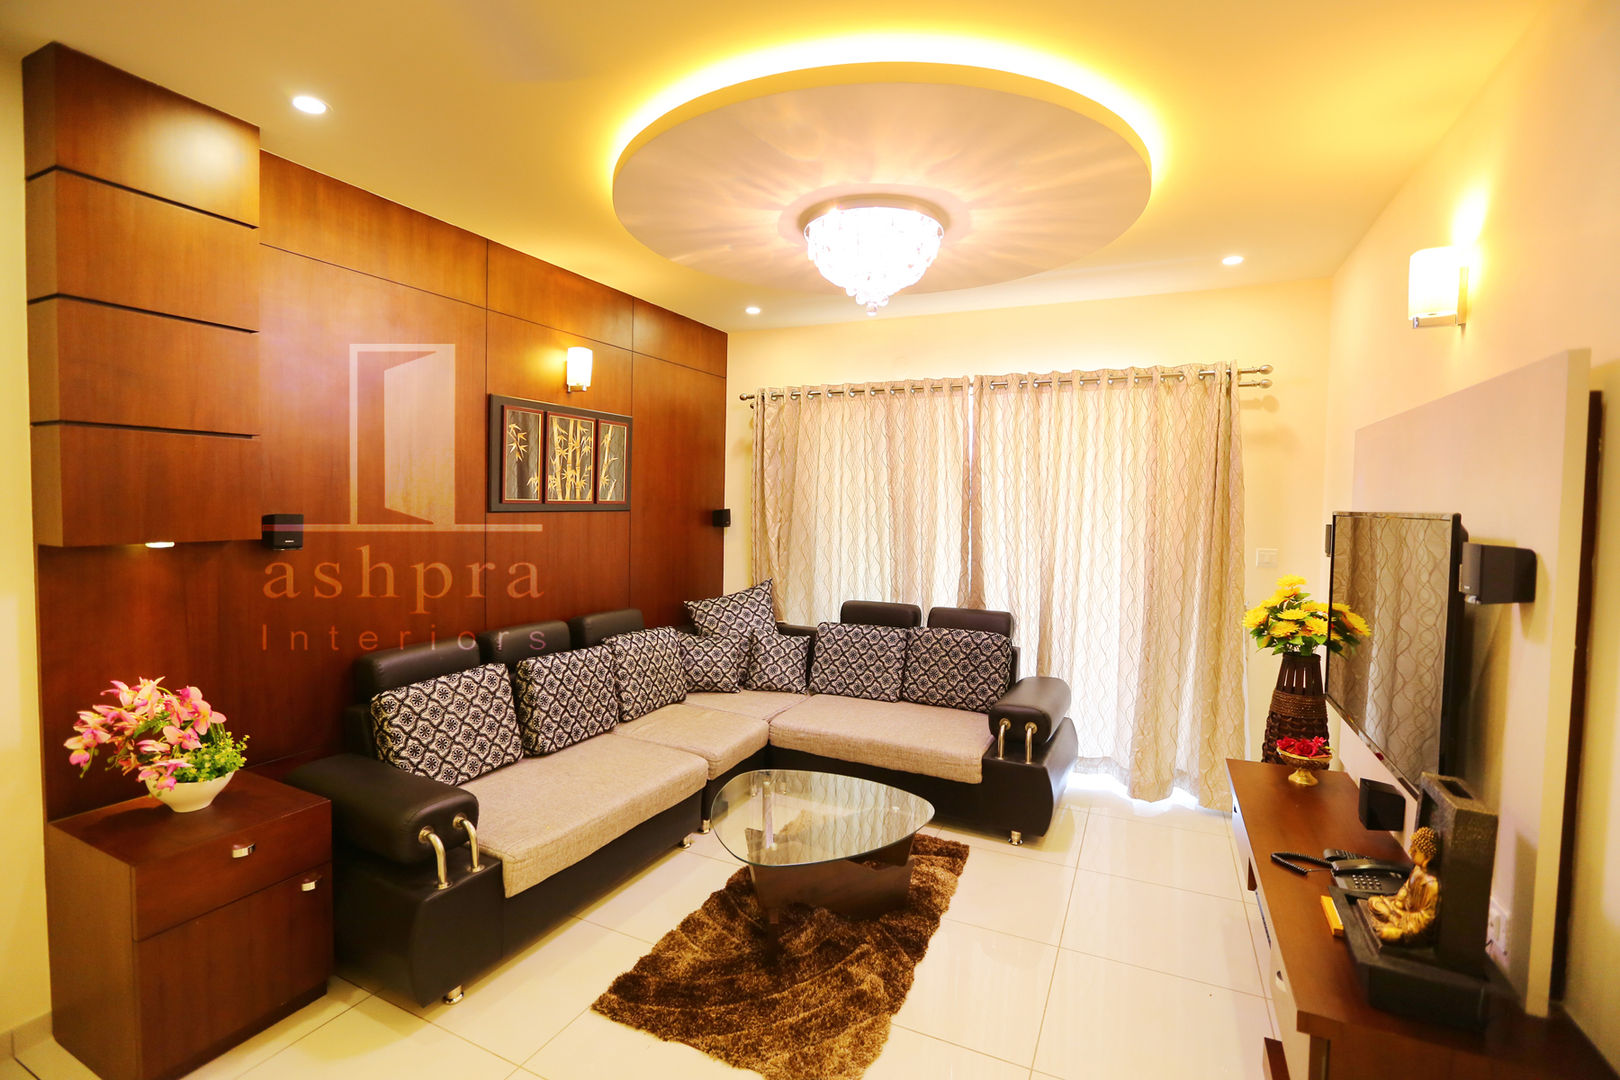 Living Ashpra interiors Asian style living room Sofas & armchairs